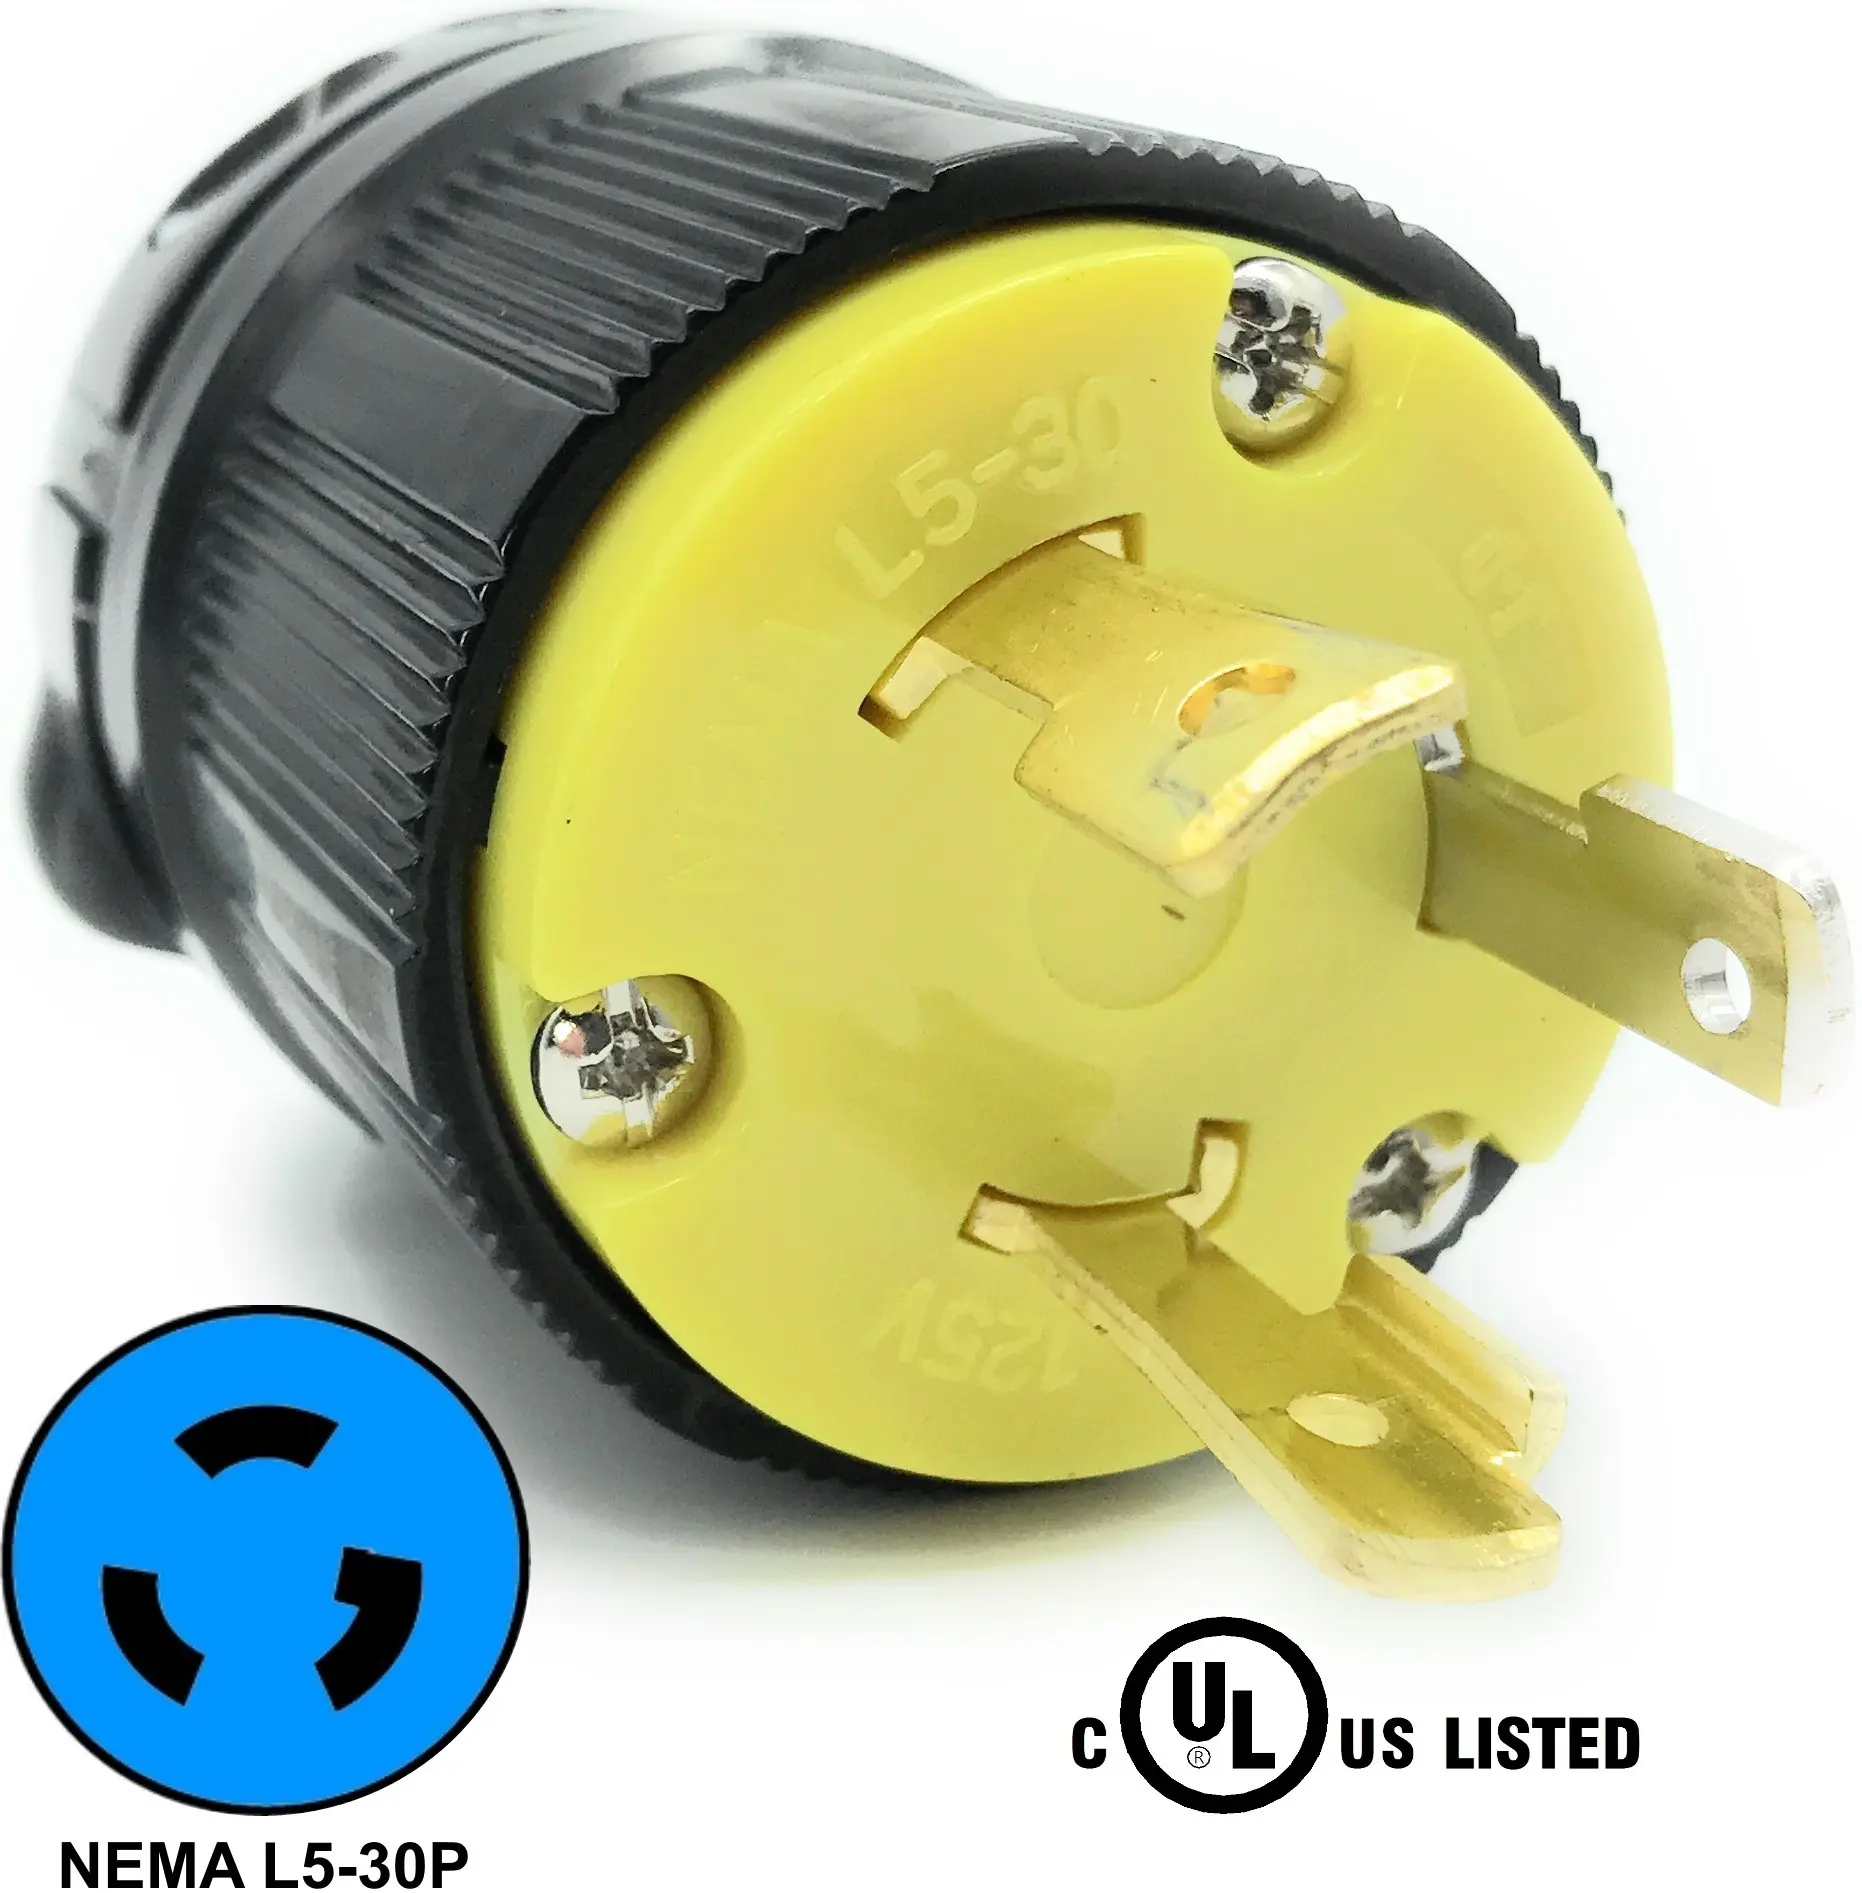 Cheap 220 Volt Male Plug Find 220 Volt Male Plug Deals On Line At